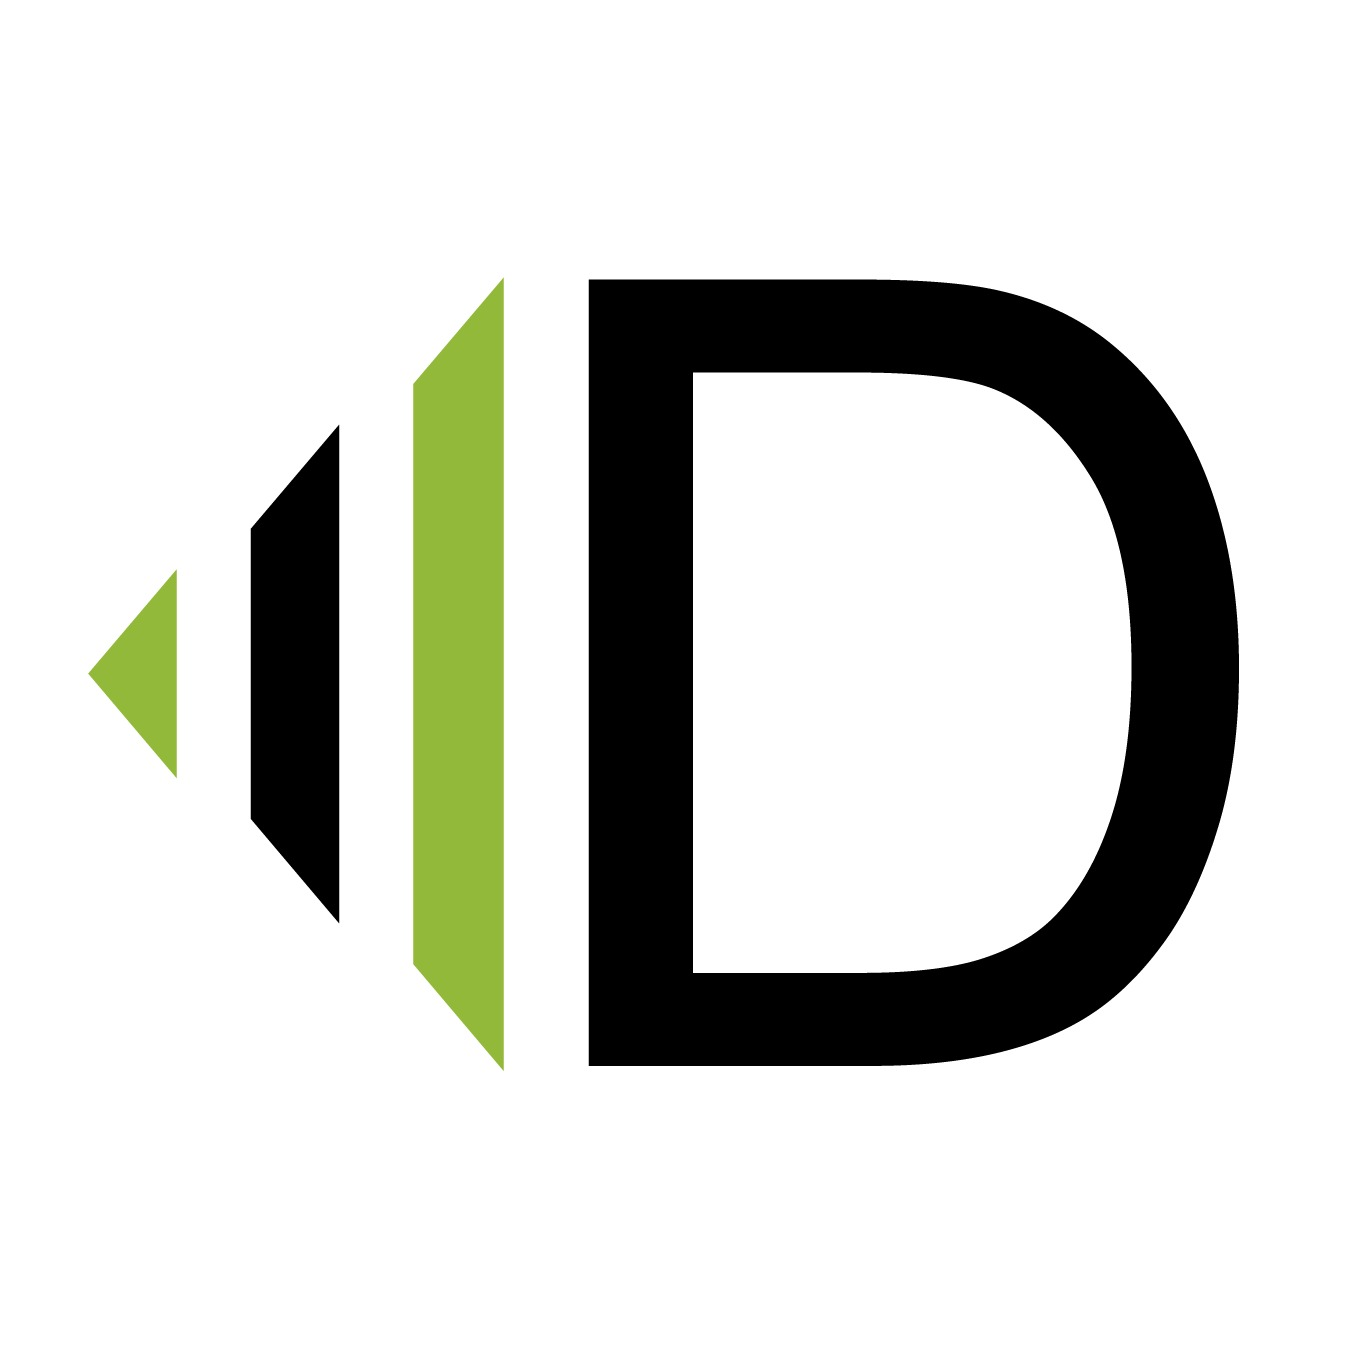 Dynamic Home Enhancements Logo